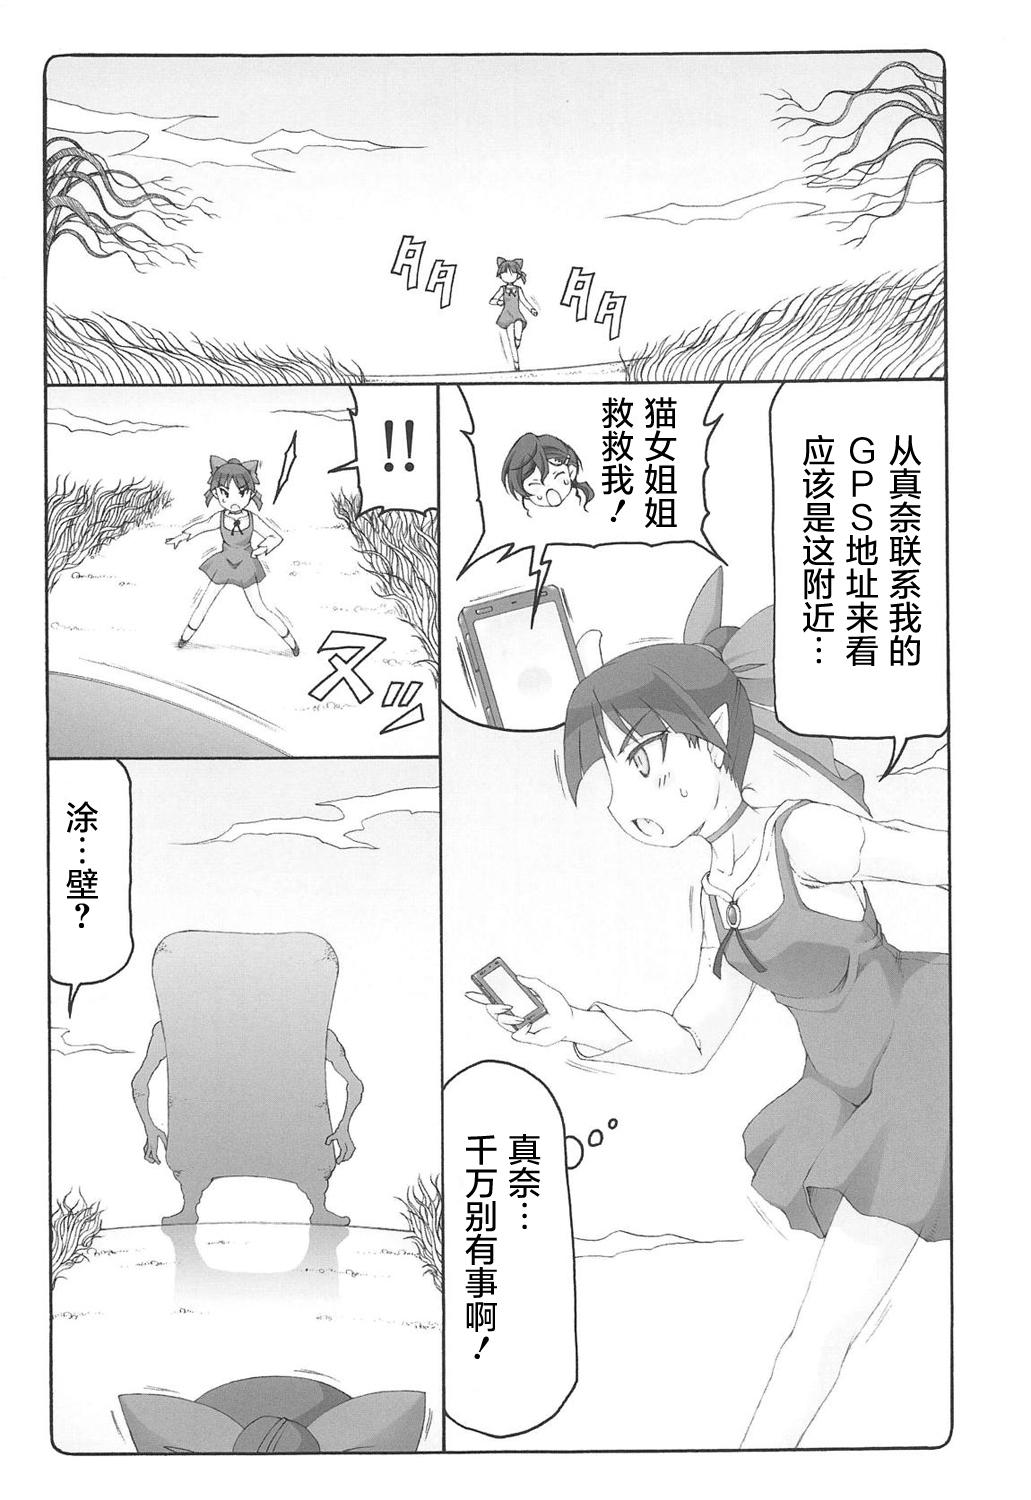 Latex Nuko Musume vs Youkai Shirikabe - Gegege no kitarou Threesome - Page 5